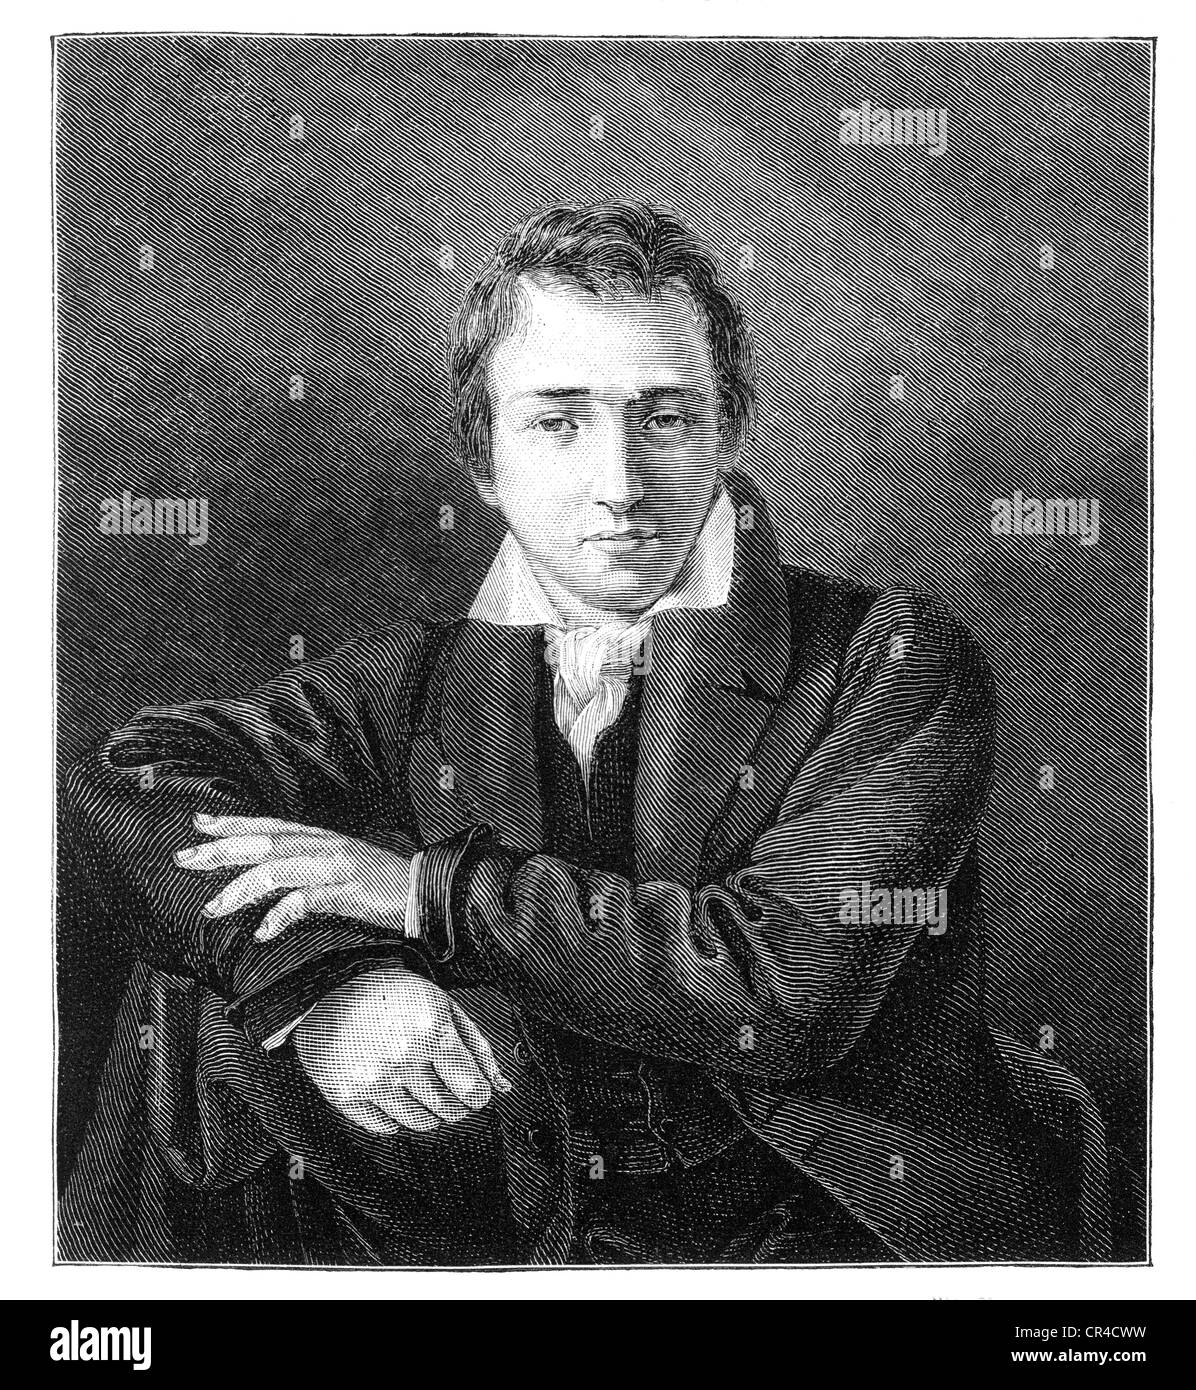 Christian Johann Heinrich Heine (1797 - 1856), poeta, scrittore, incisione in acciaio secondo una immagine da M. Oppenheim Foto Stock